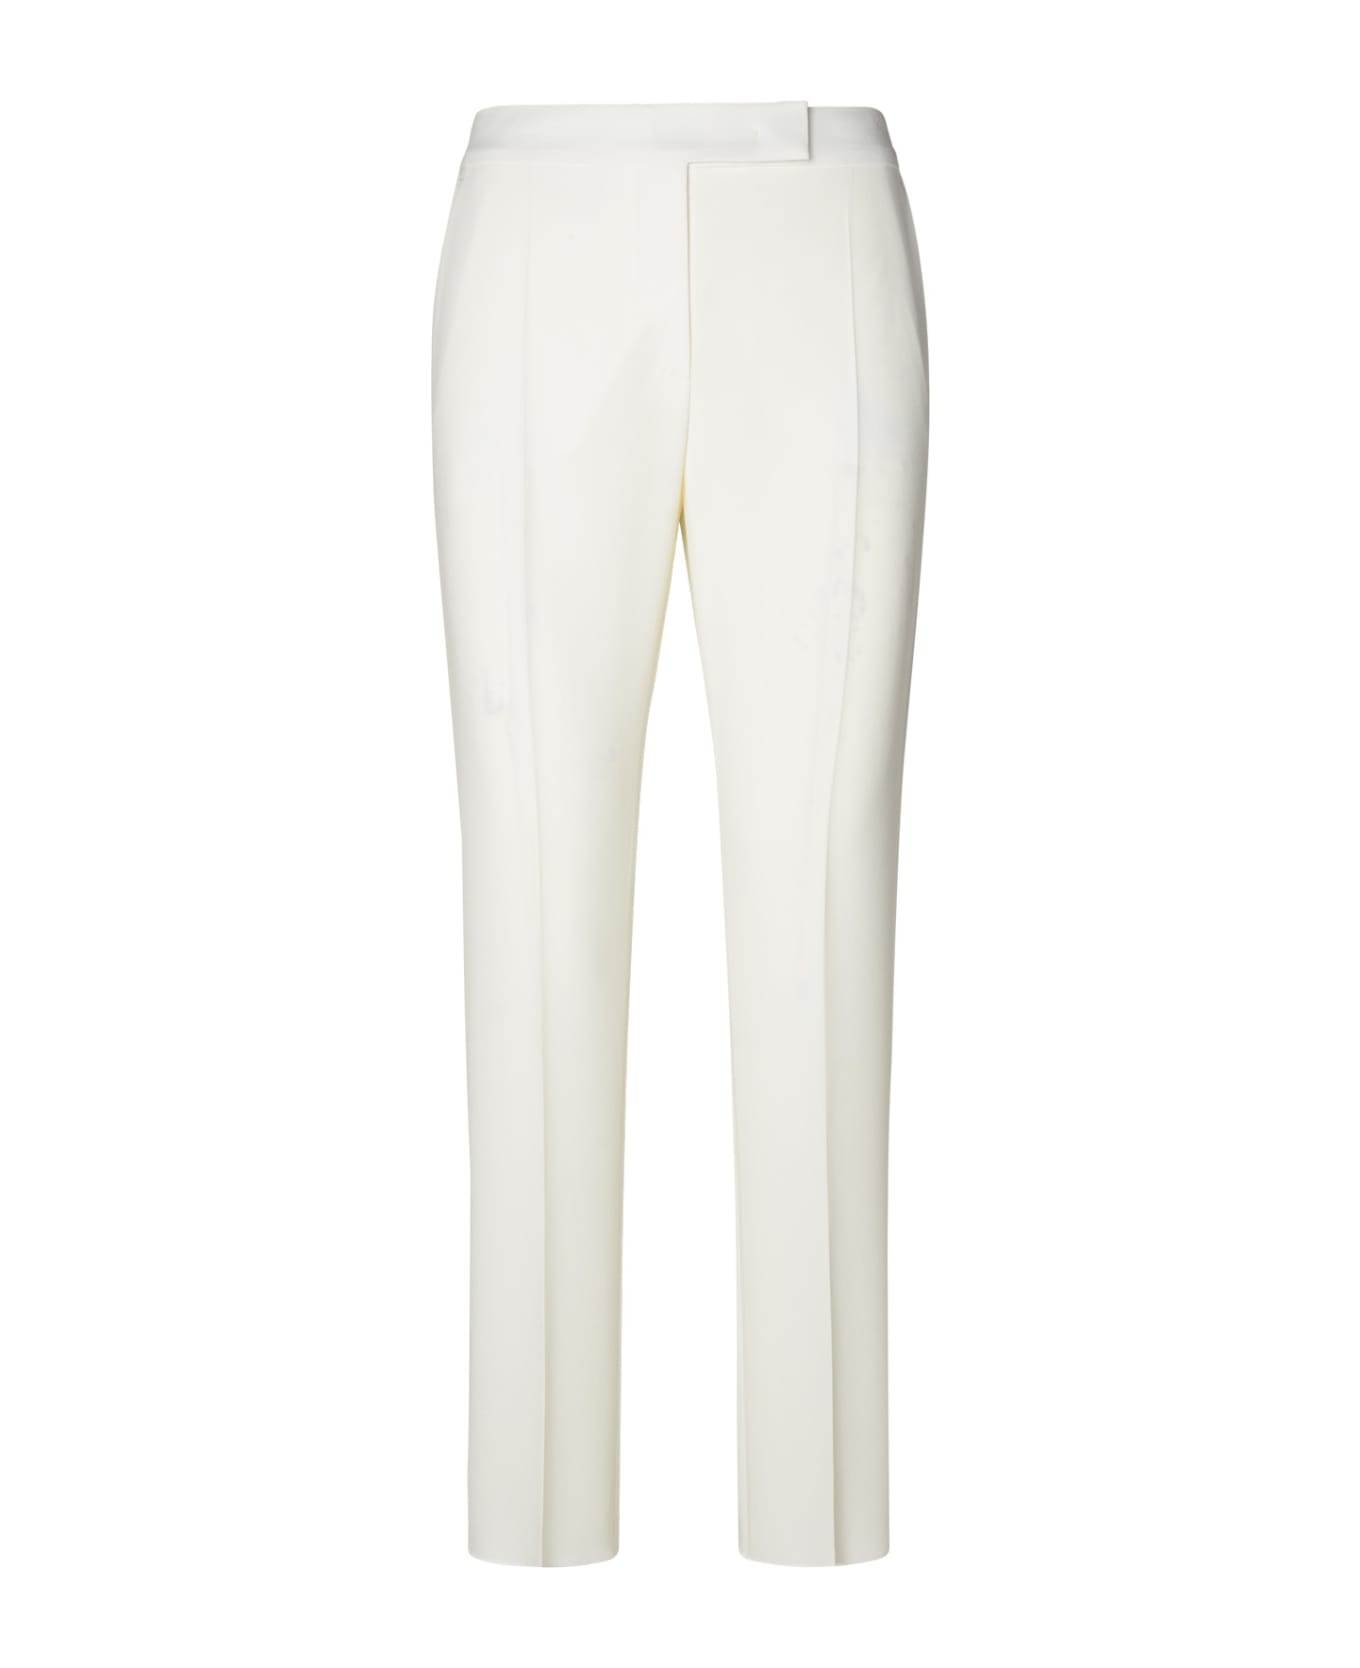 Max Mara White Triacetate Blend Trousers - White